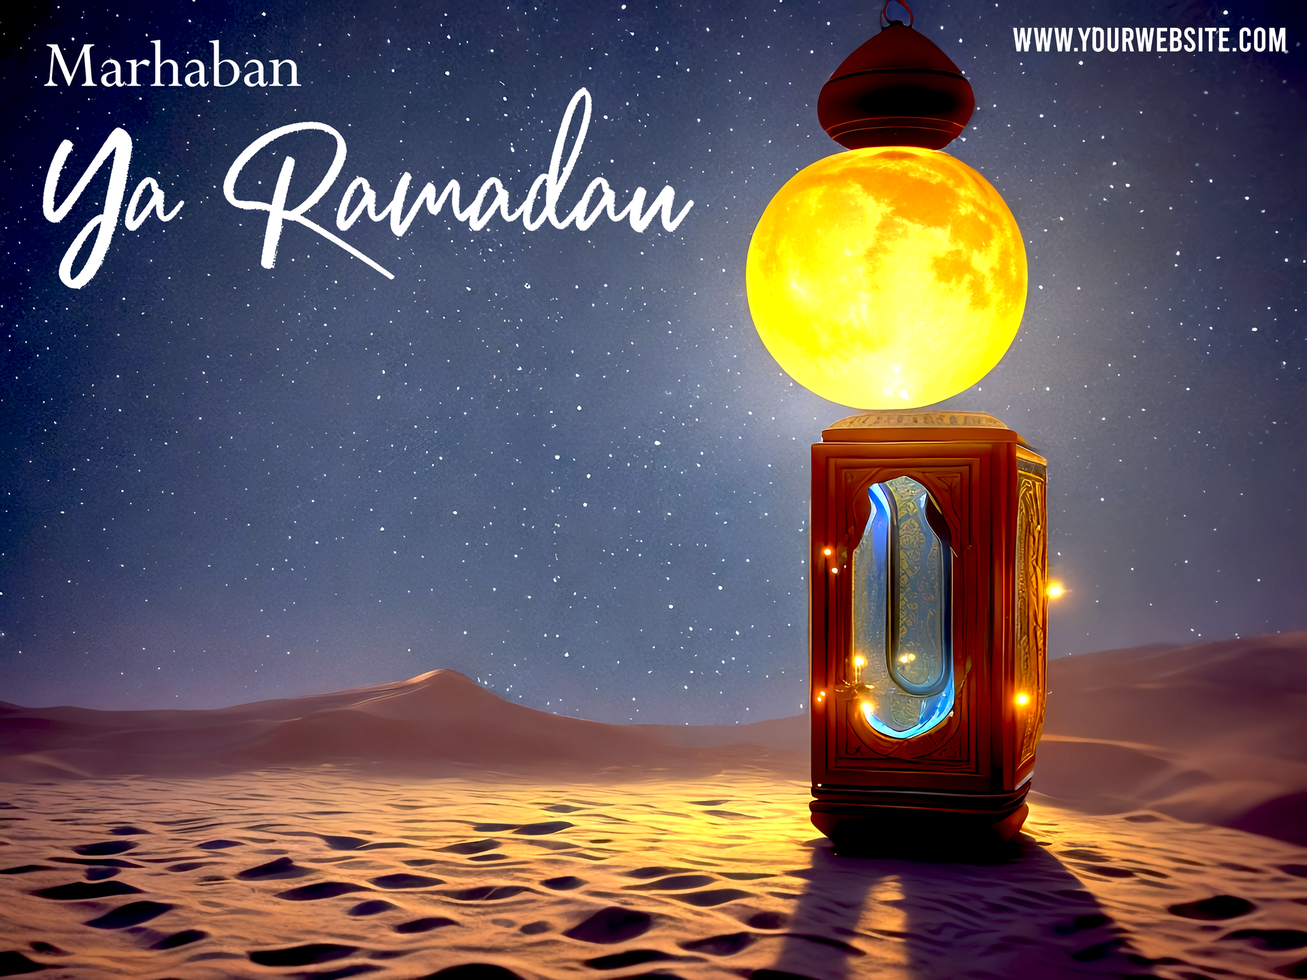 Ramadan Poster with Lantern in Beautiful Night with Crecent Moon Image psd